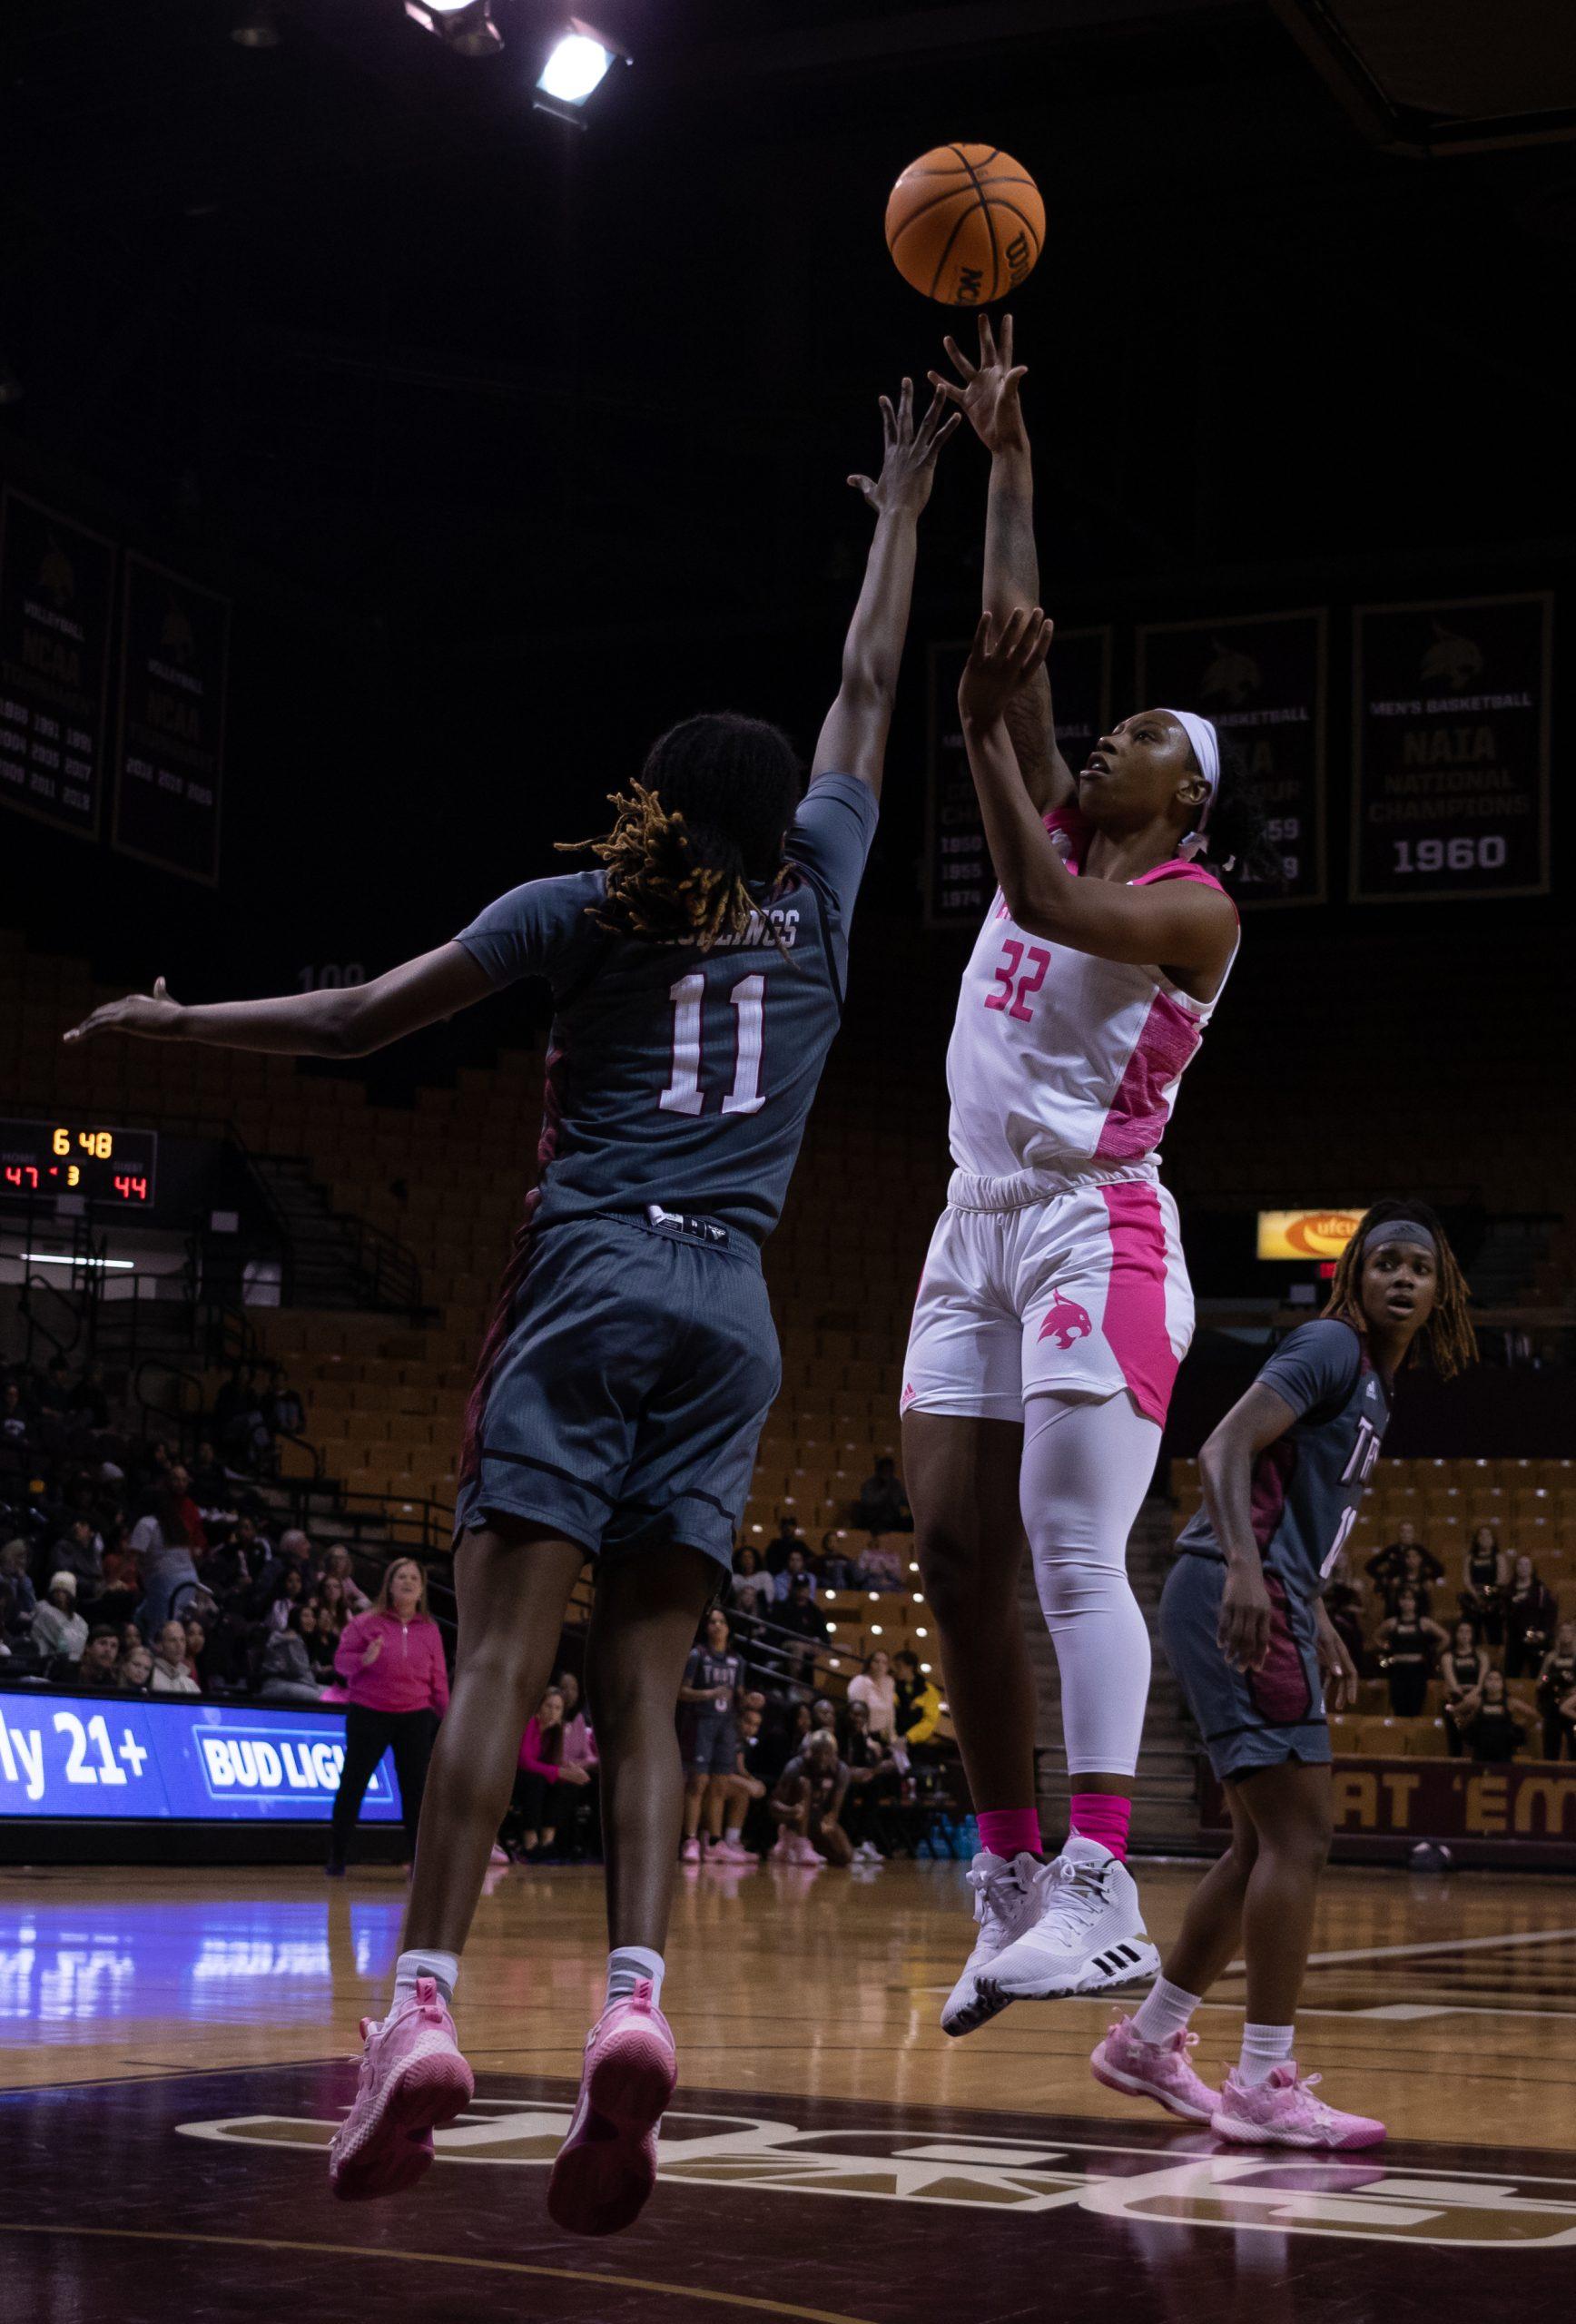 Womens+basketball+vs.+Troy+University%3A+A+Photo+Gallery